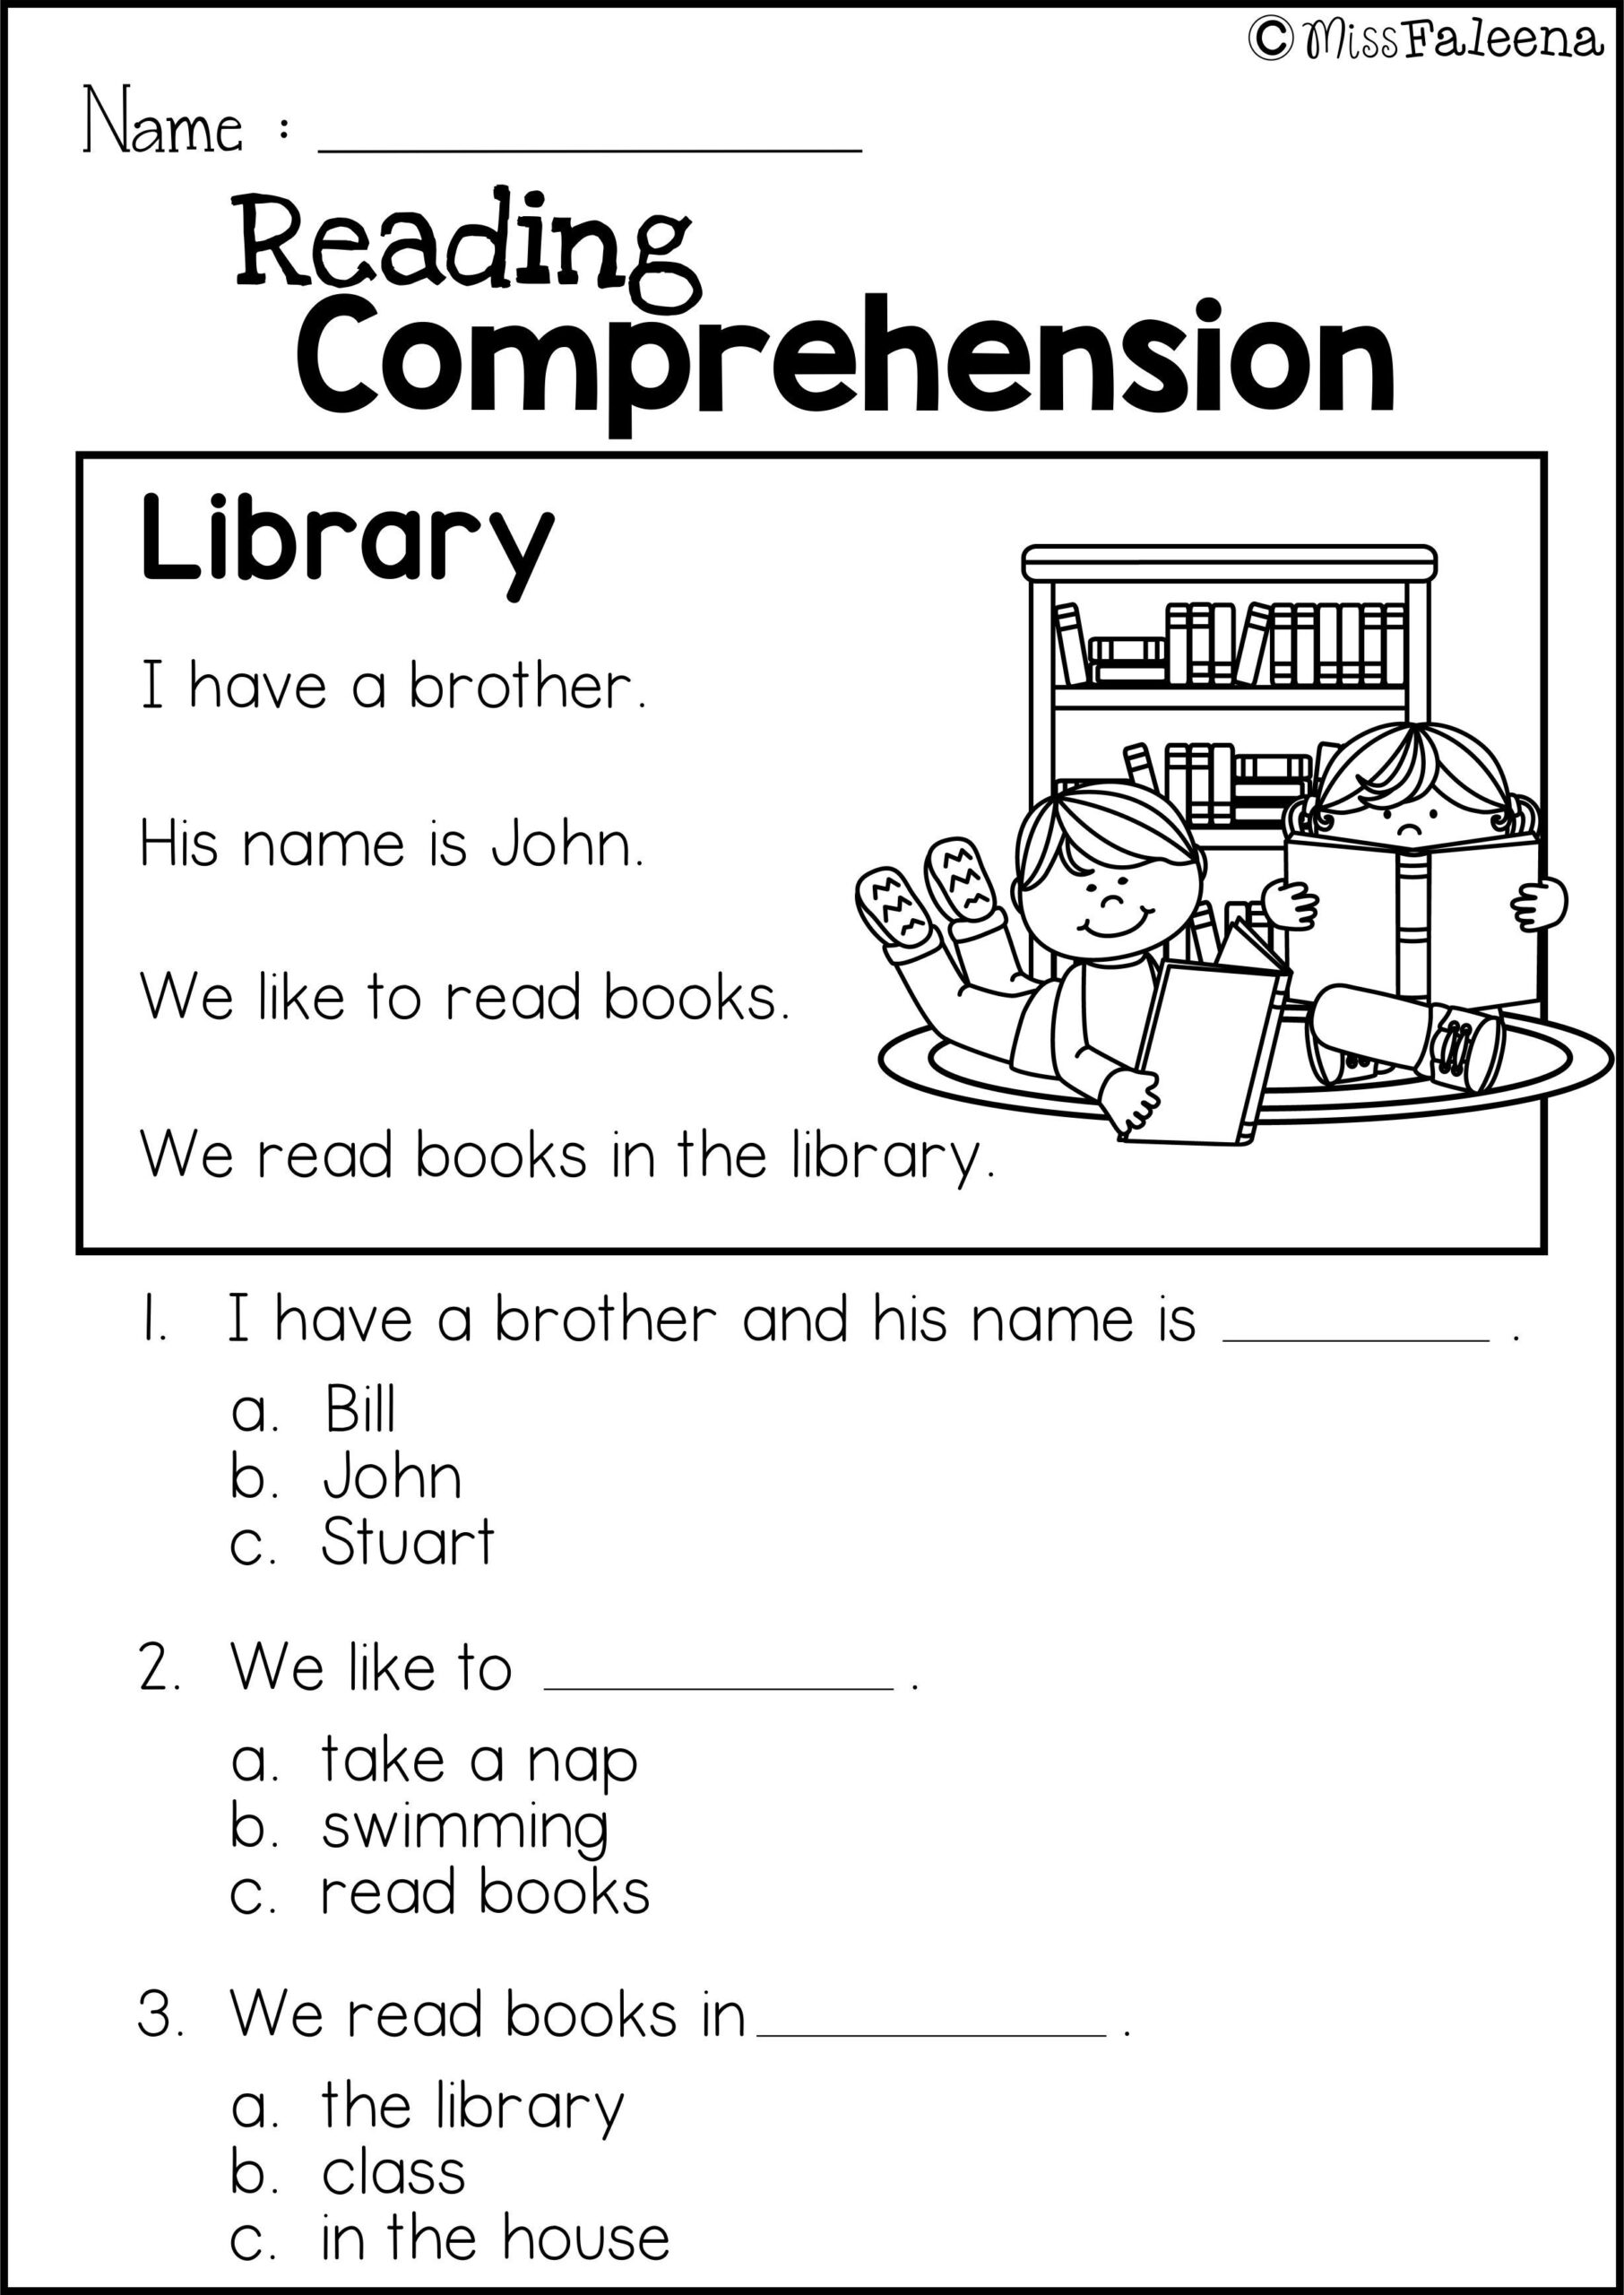 reading-comprehension-worksheets-free-1st-reading-comprehension